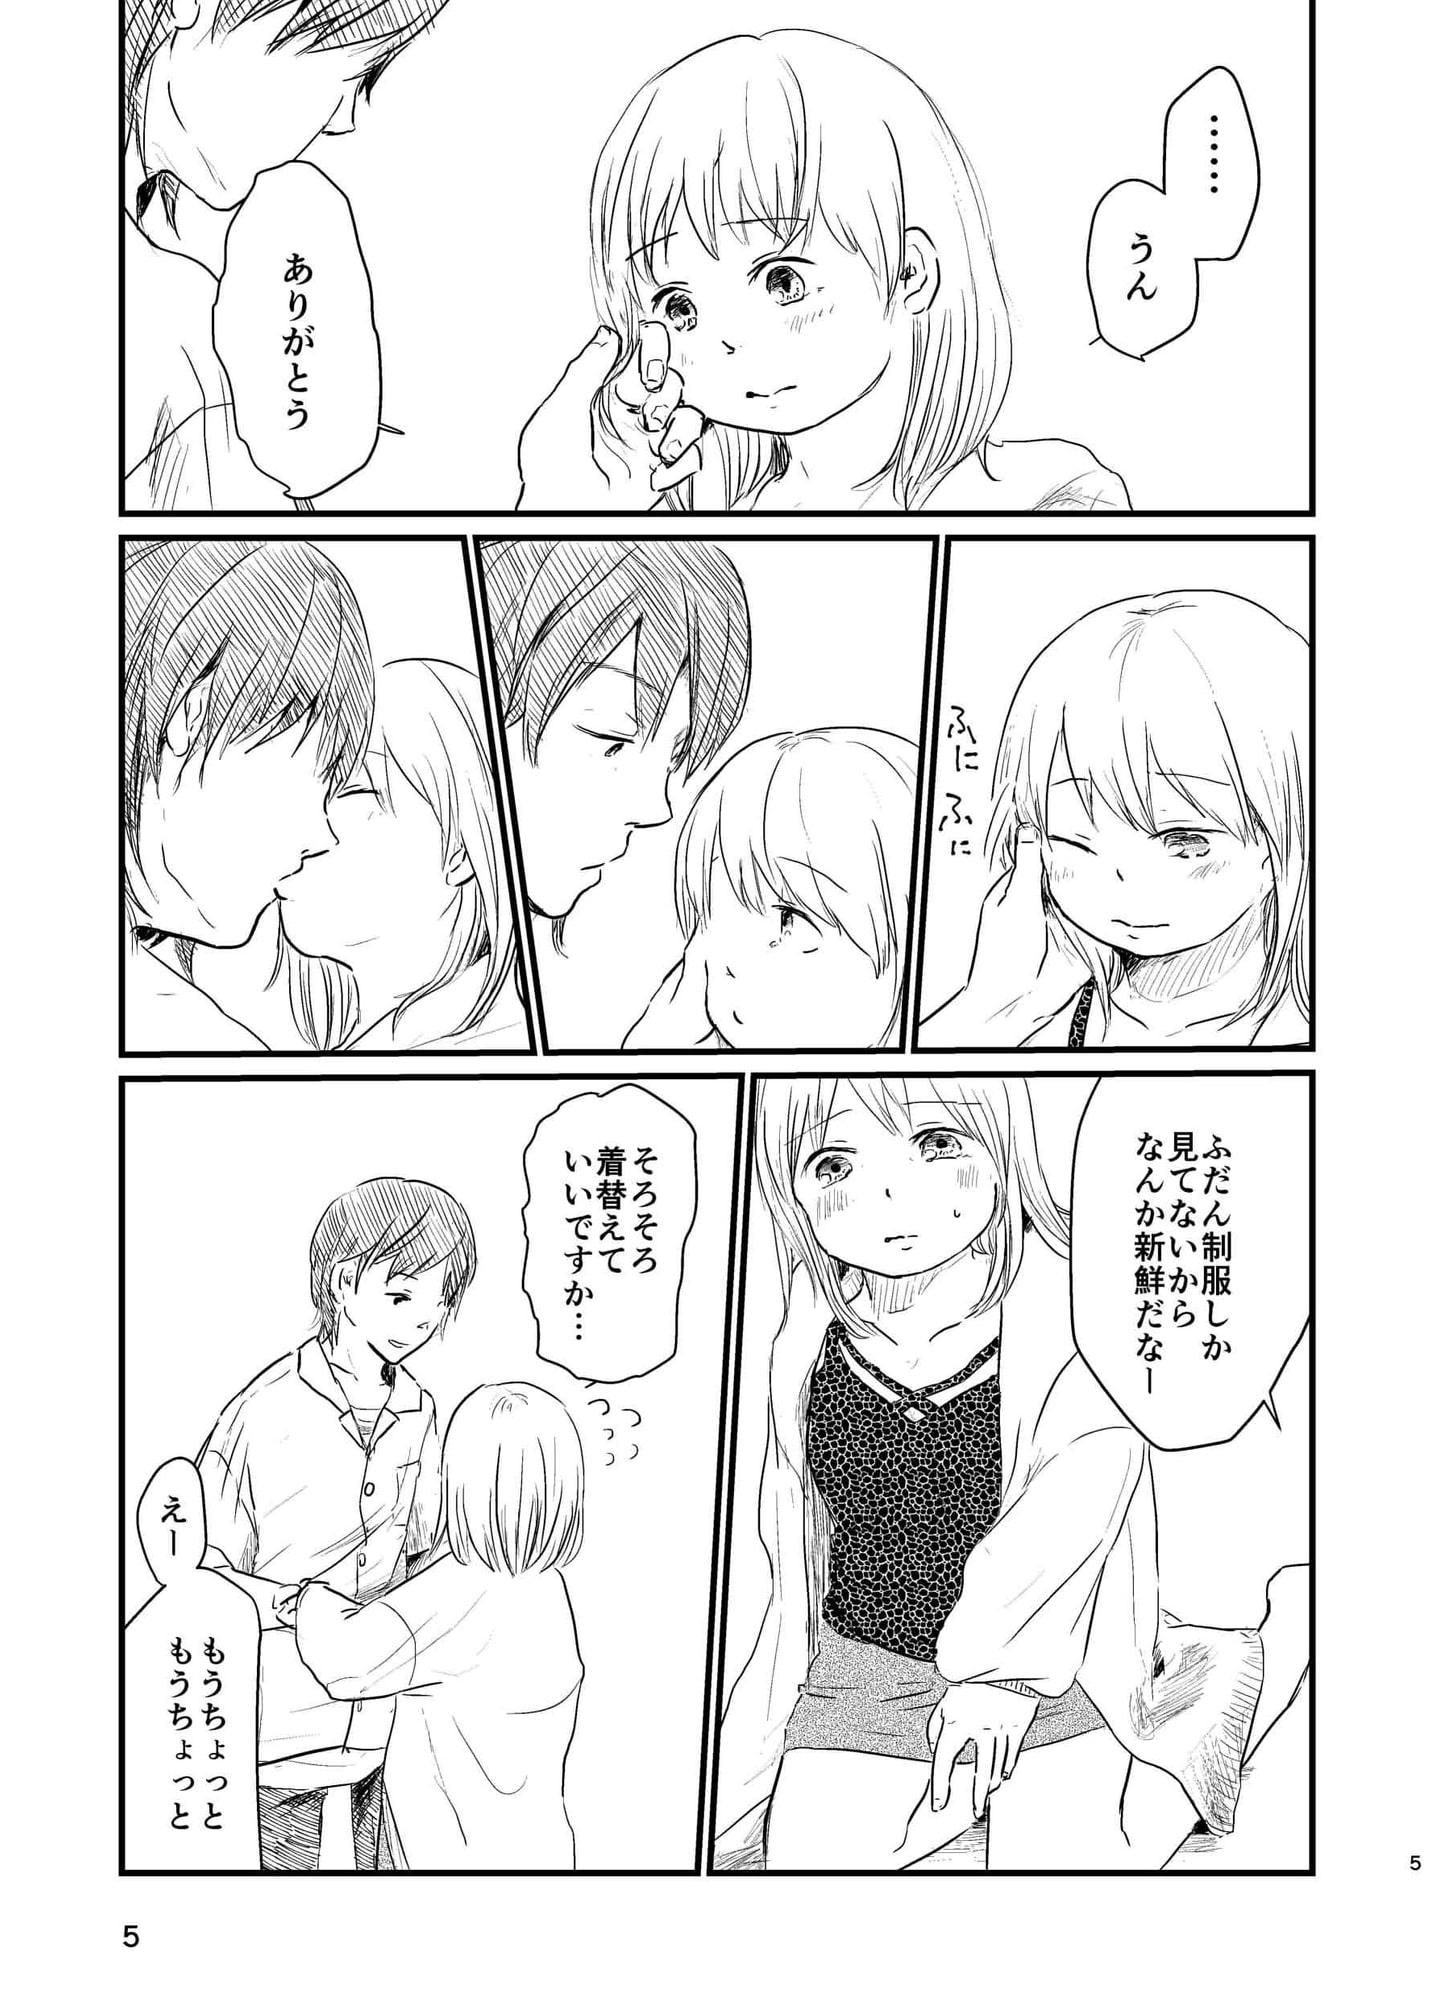 Saya-chan's First Love 2